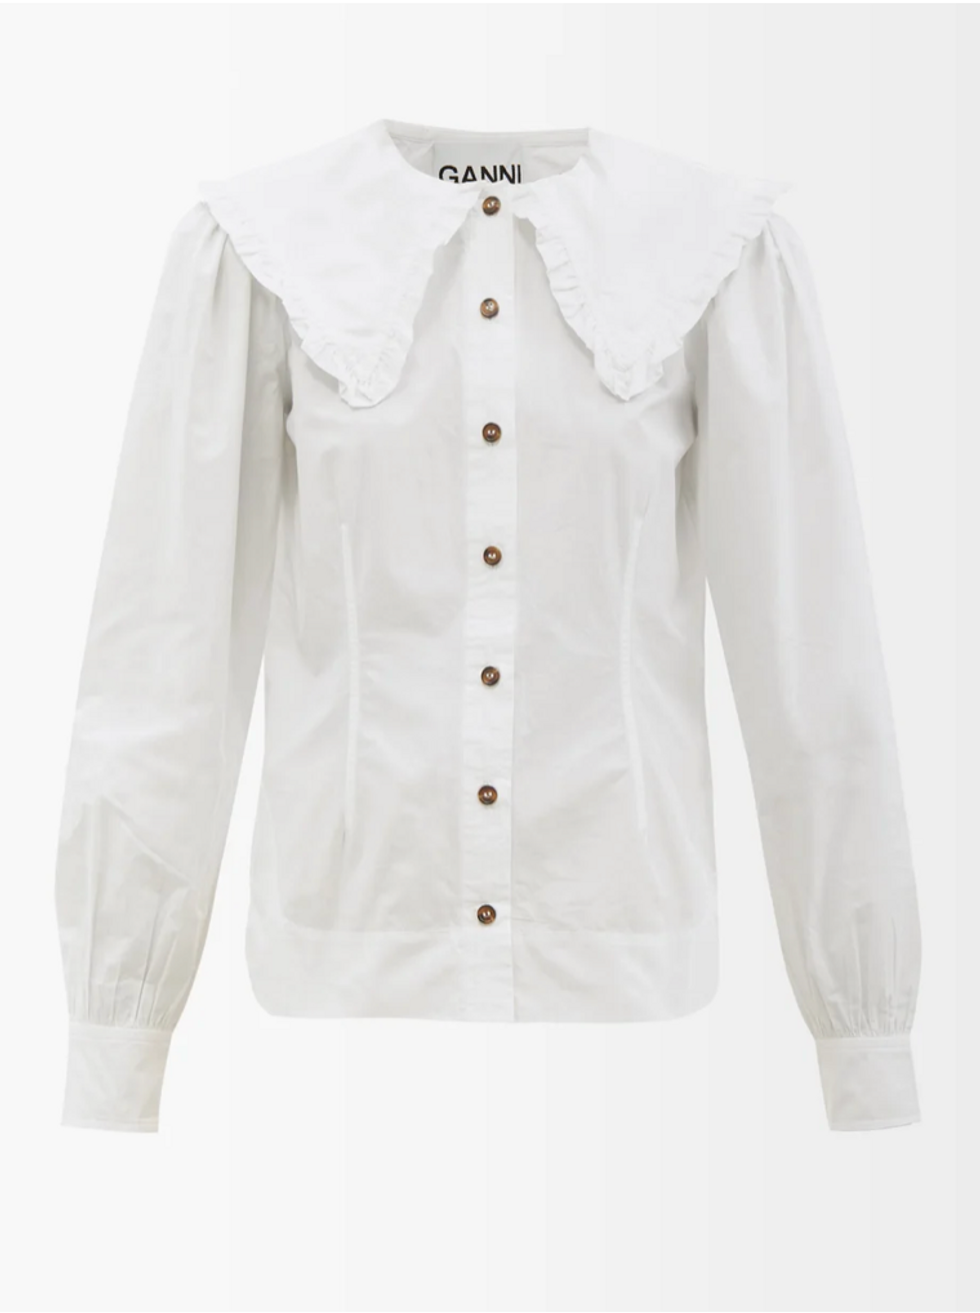 ganni white blouse